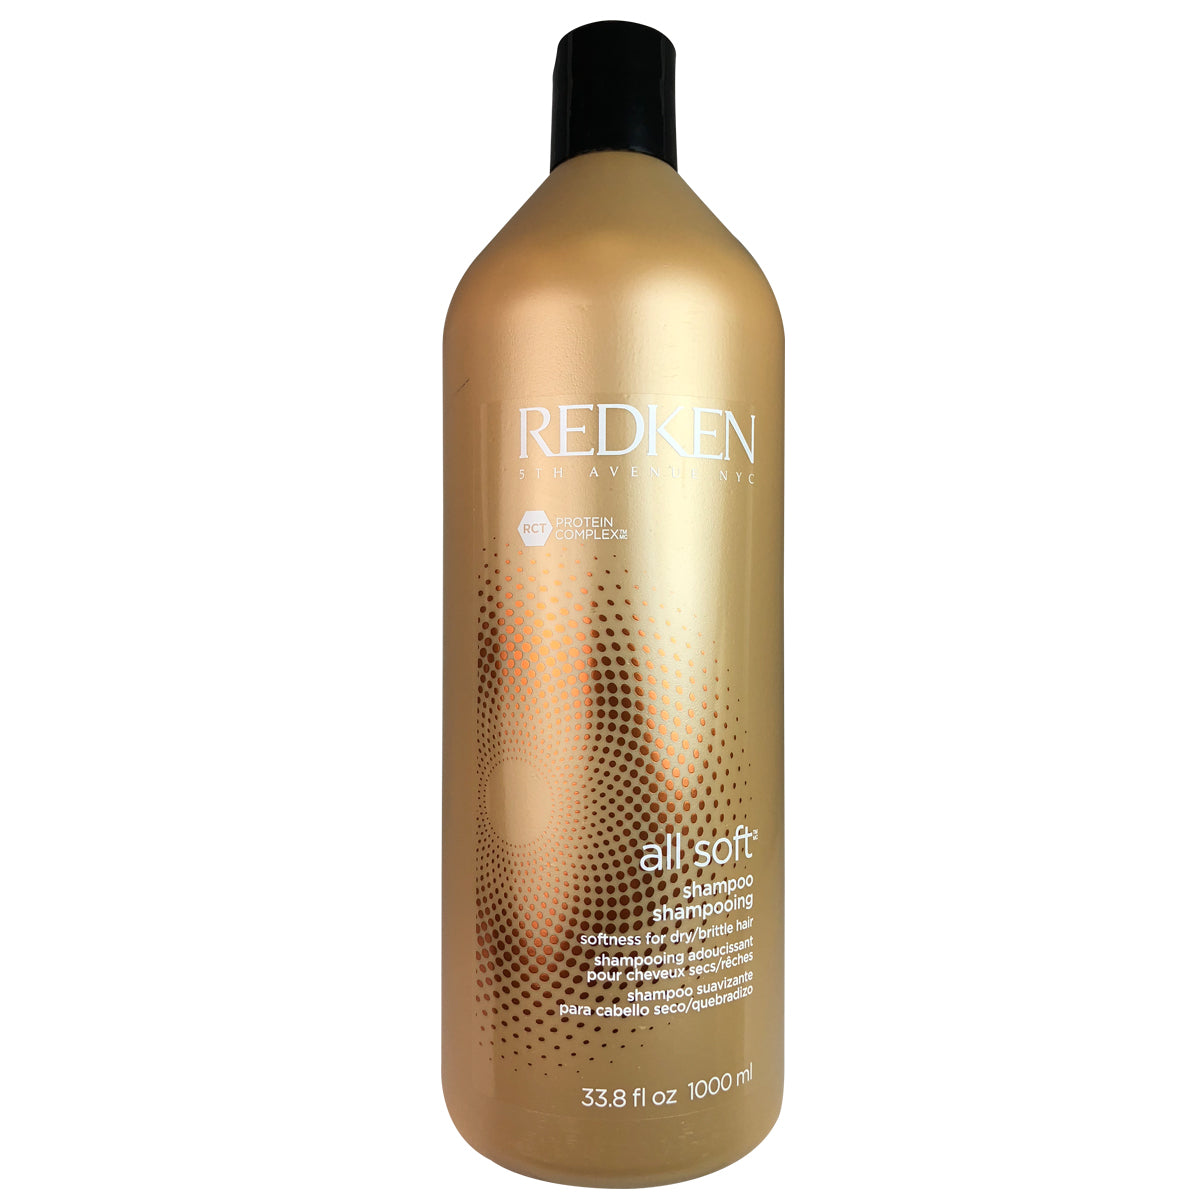 Redken All Soft Hair Shampoo 1 Liter For Dry Brittle Hair